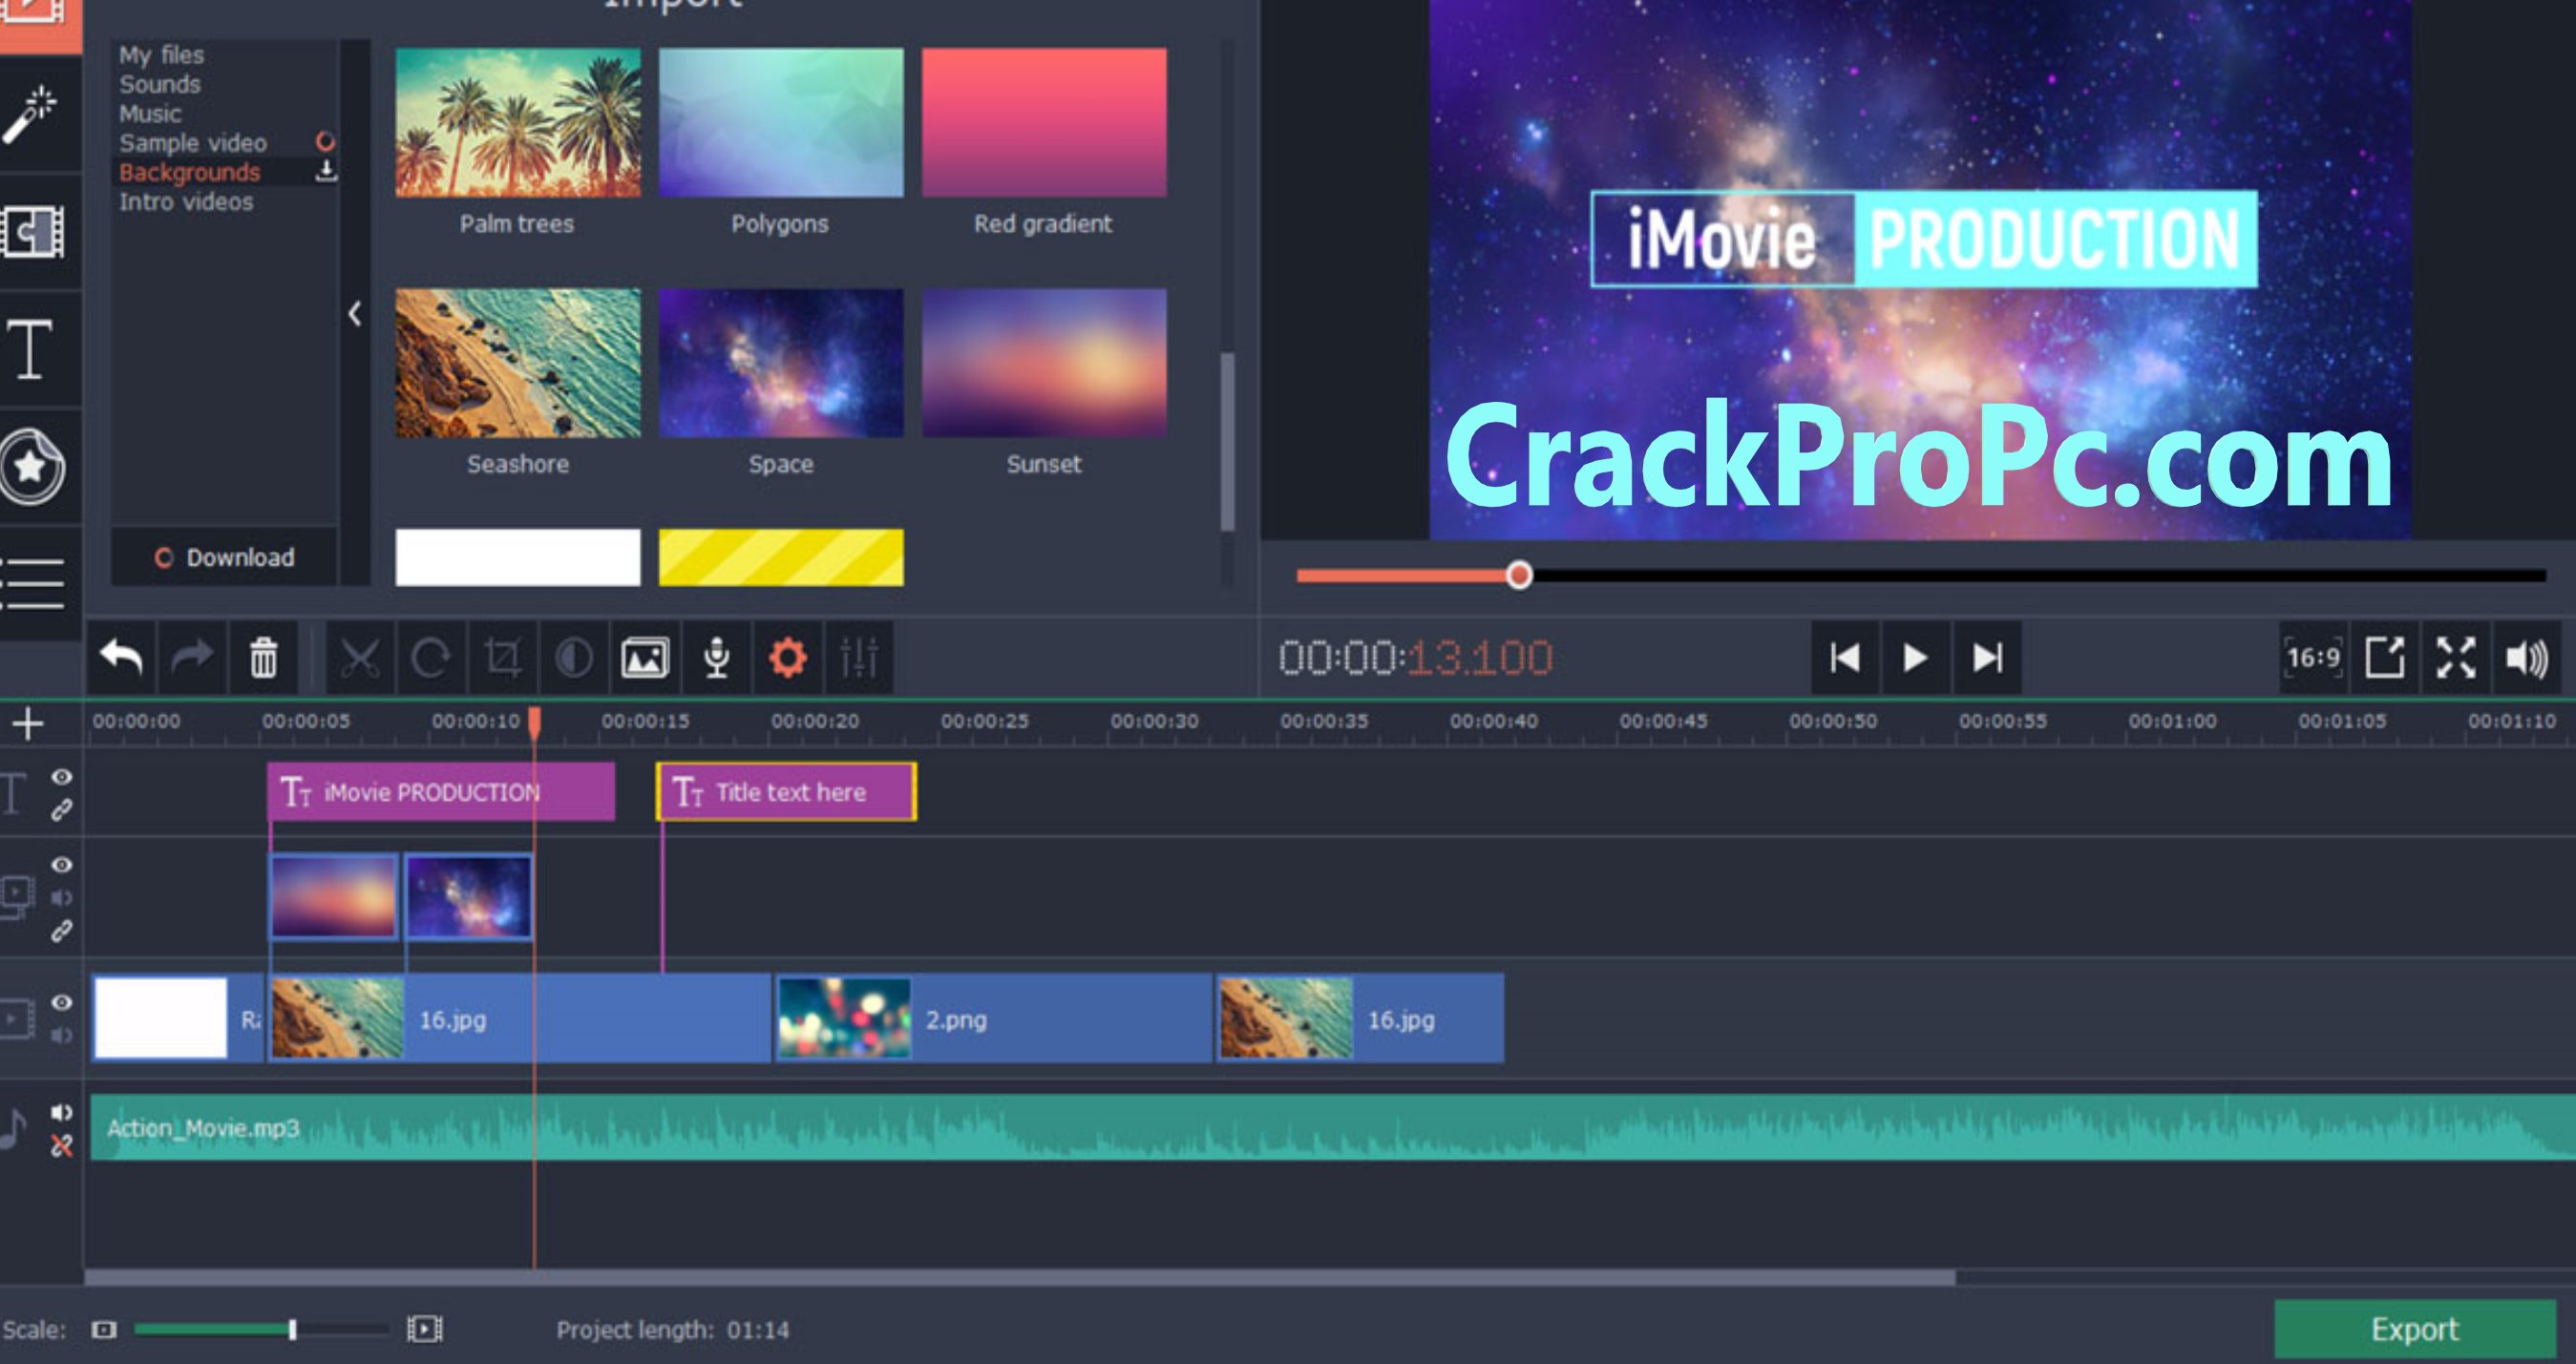 iMovie 10.3.2 Crack Win + Mac Full Latest Version Free Download 2022